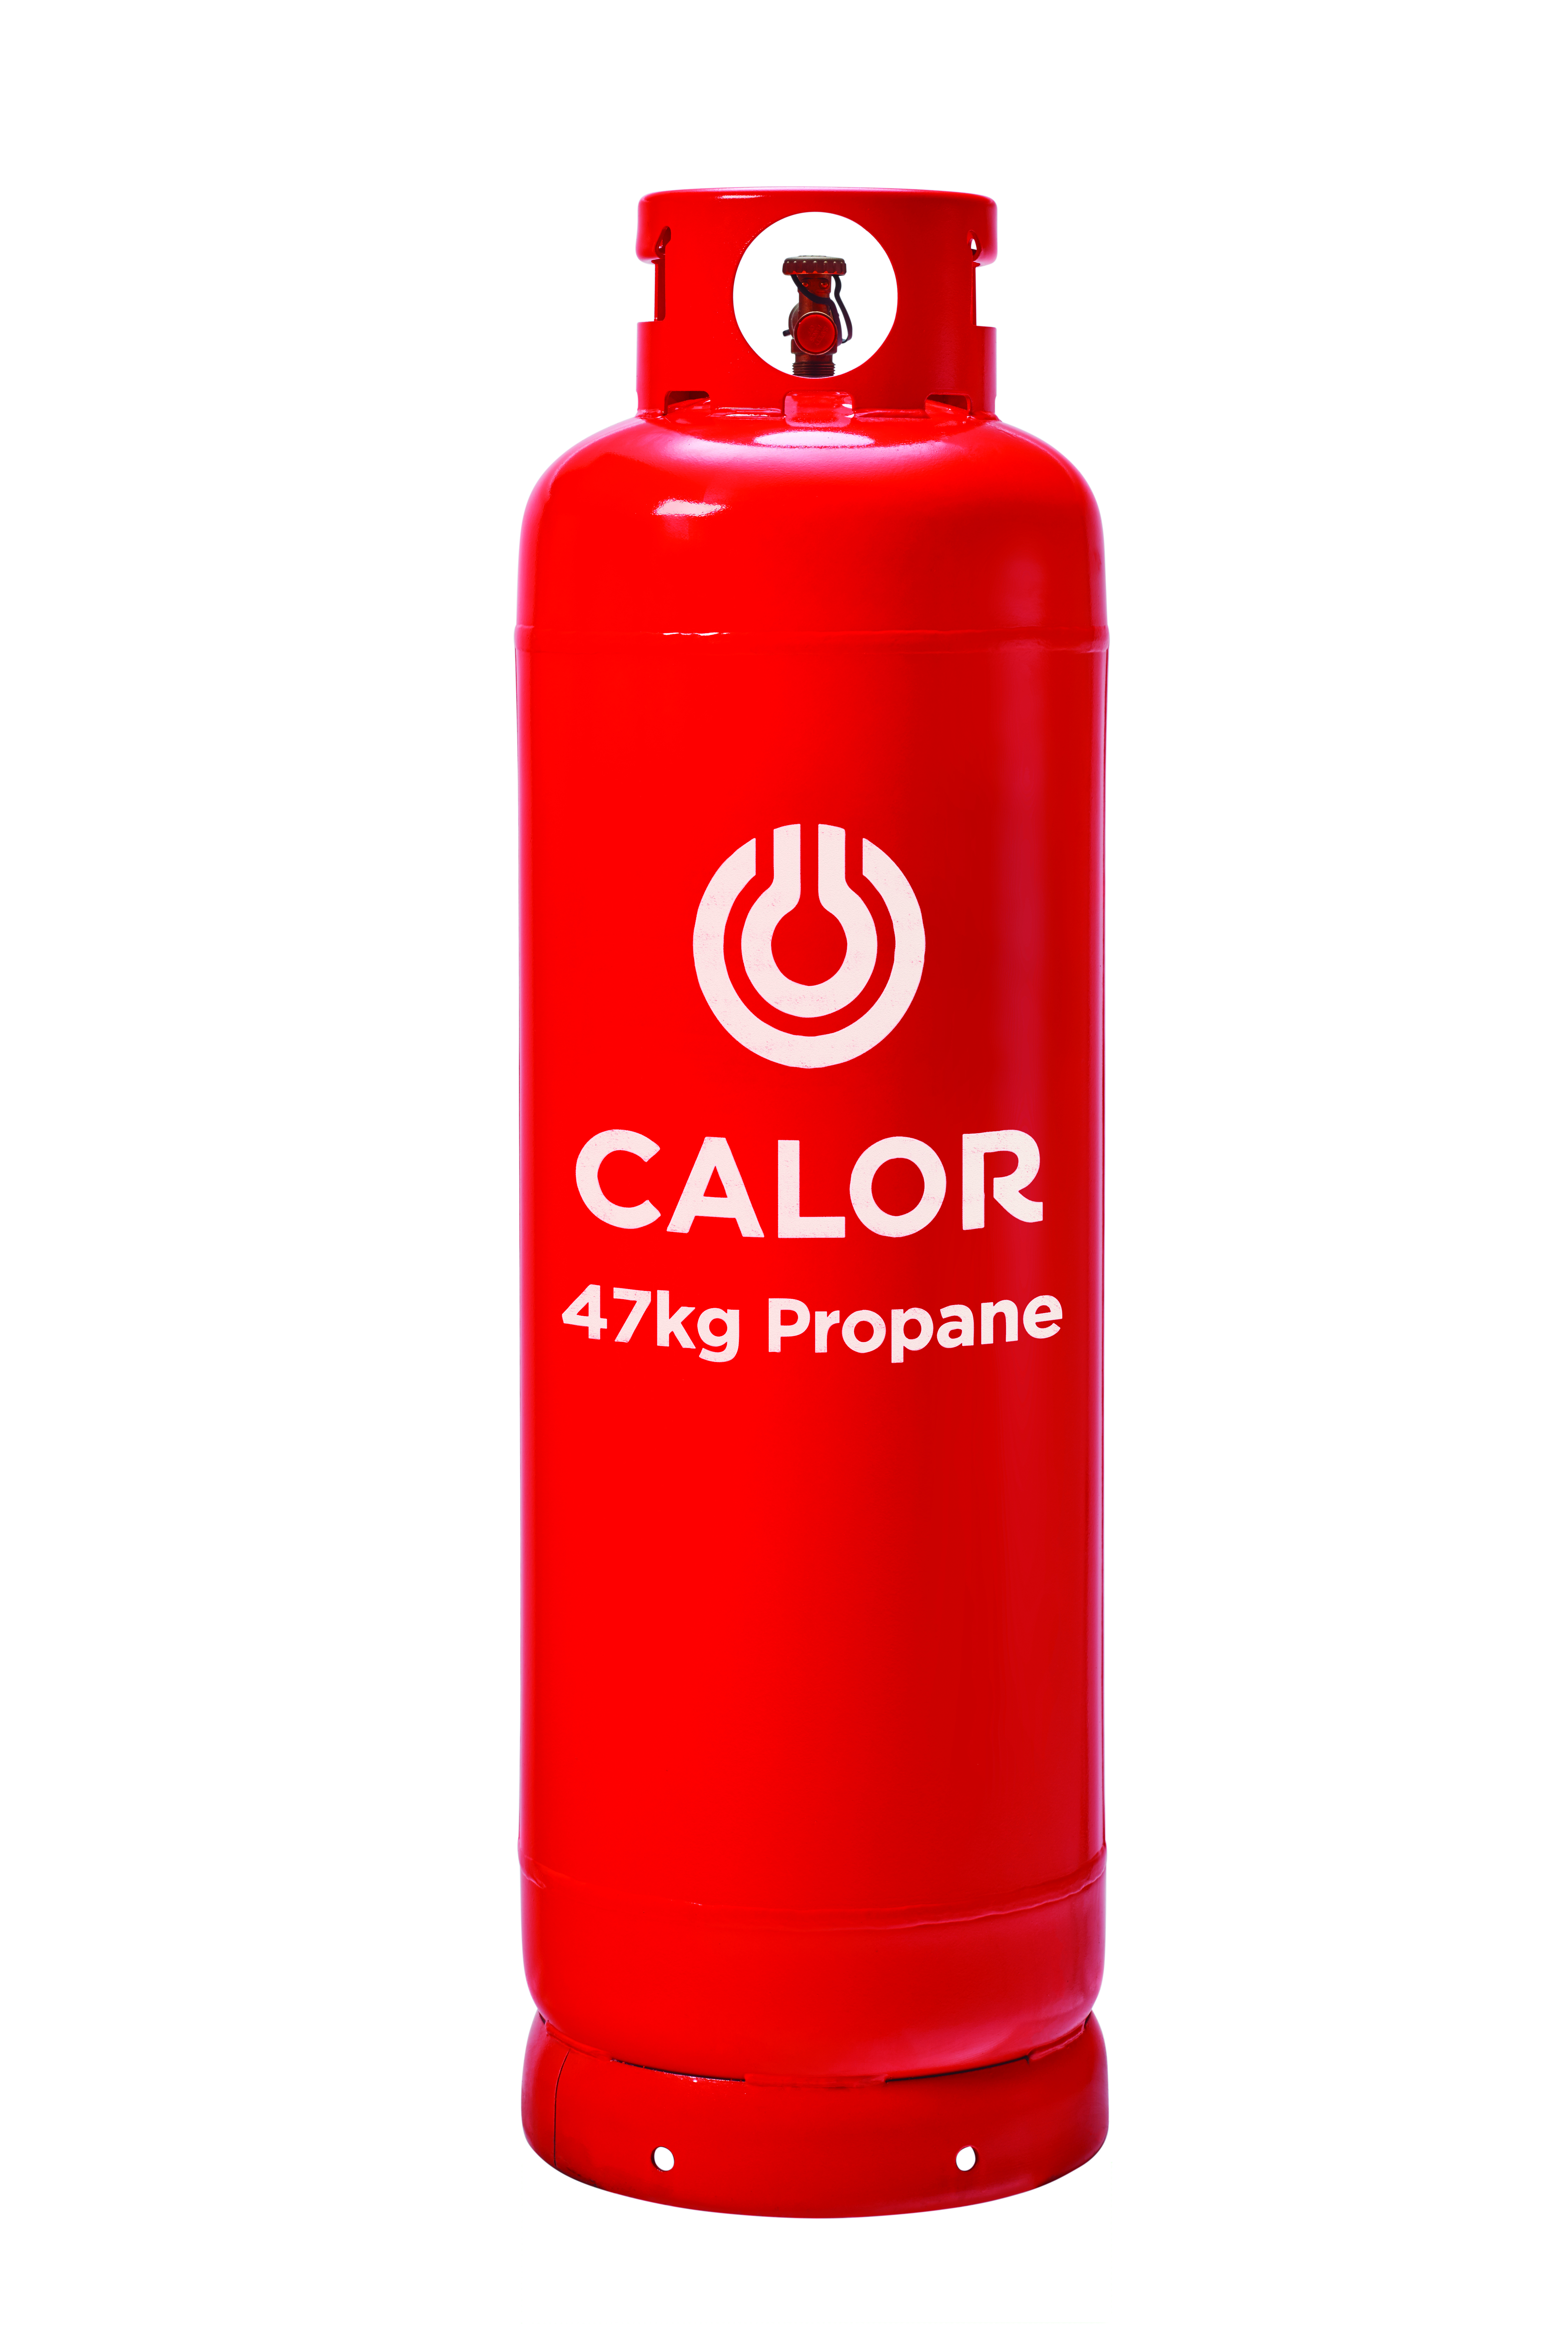 47kg Propane Calor Gas Bottle for home heating